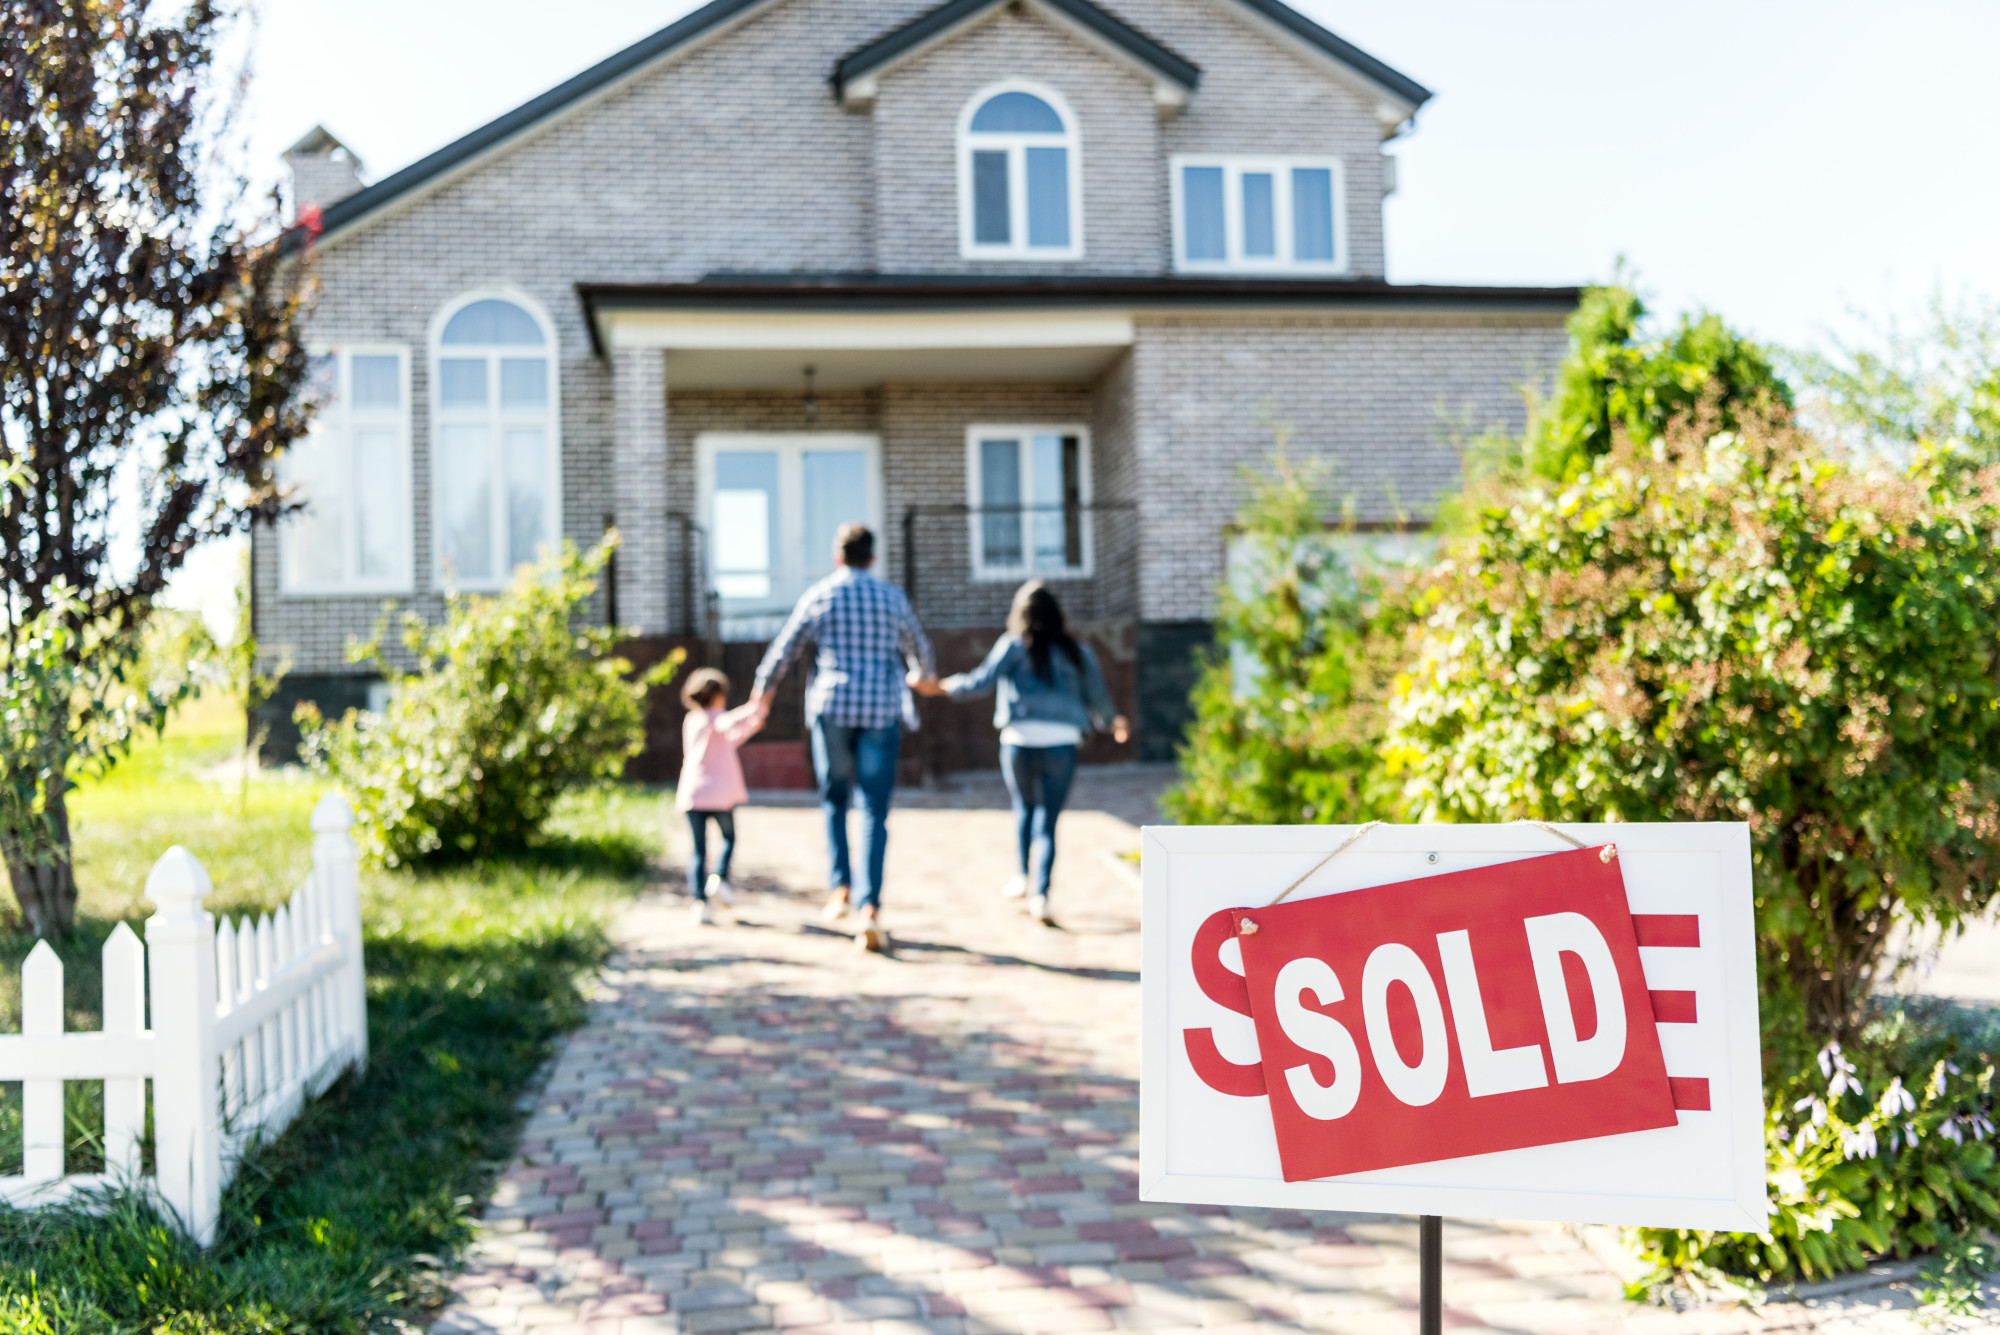 Should I Buy a Second Home?